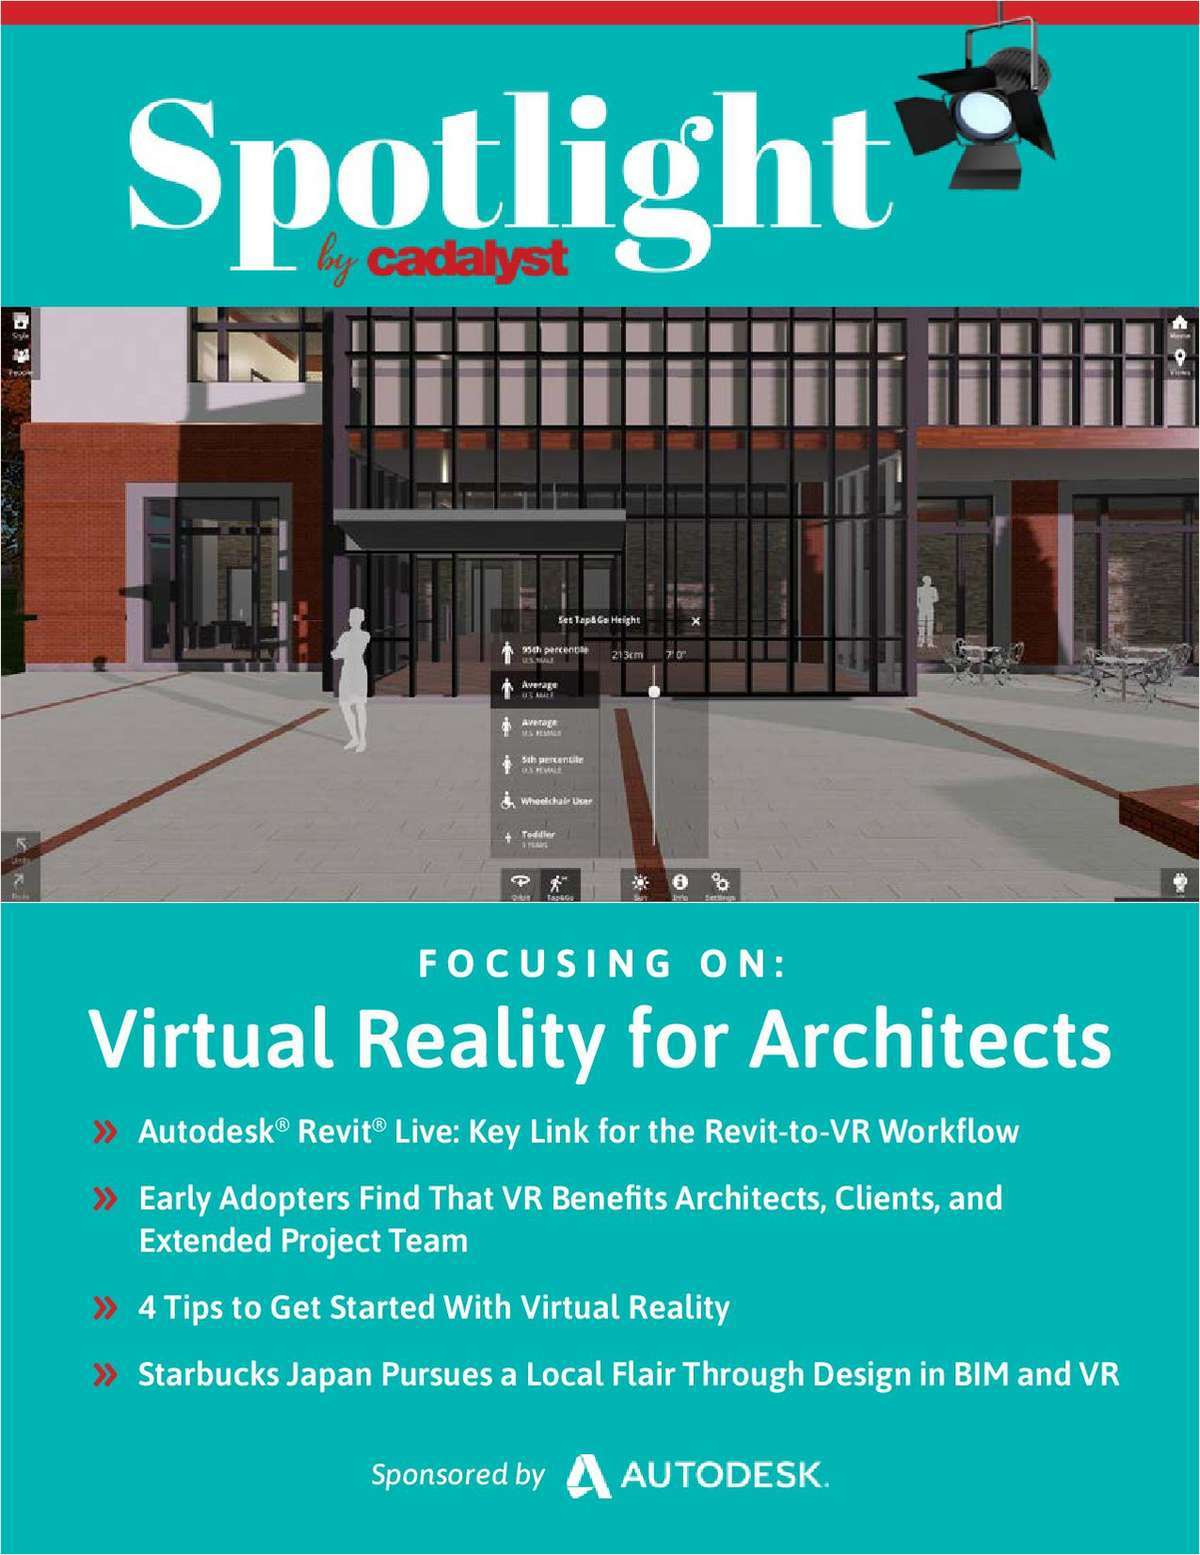 Cadalyst Spotlight: Virtual Reality for Architects